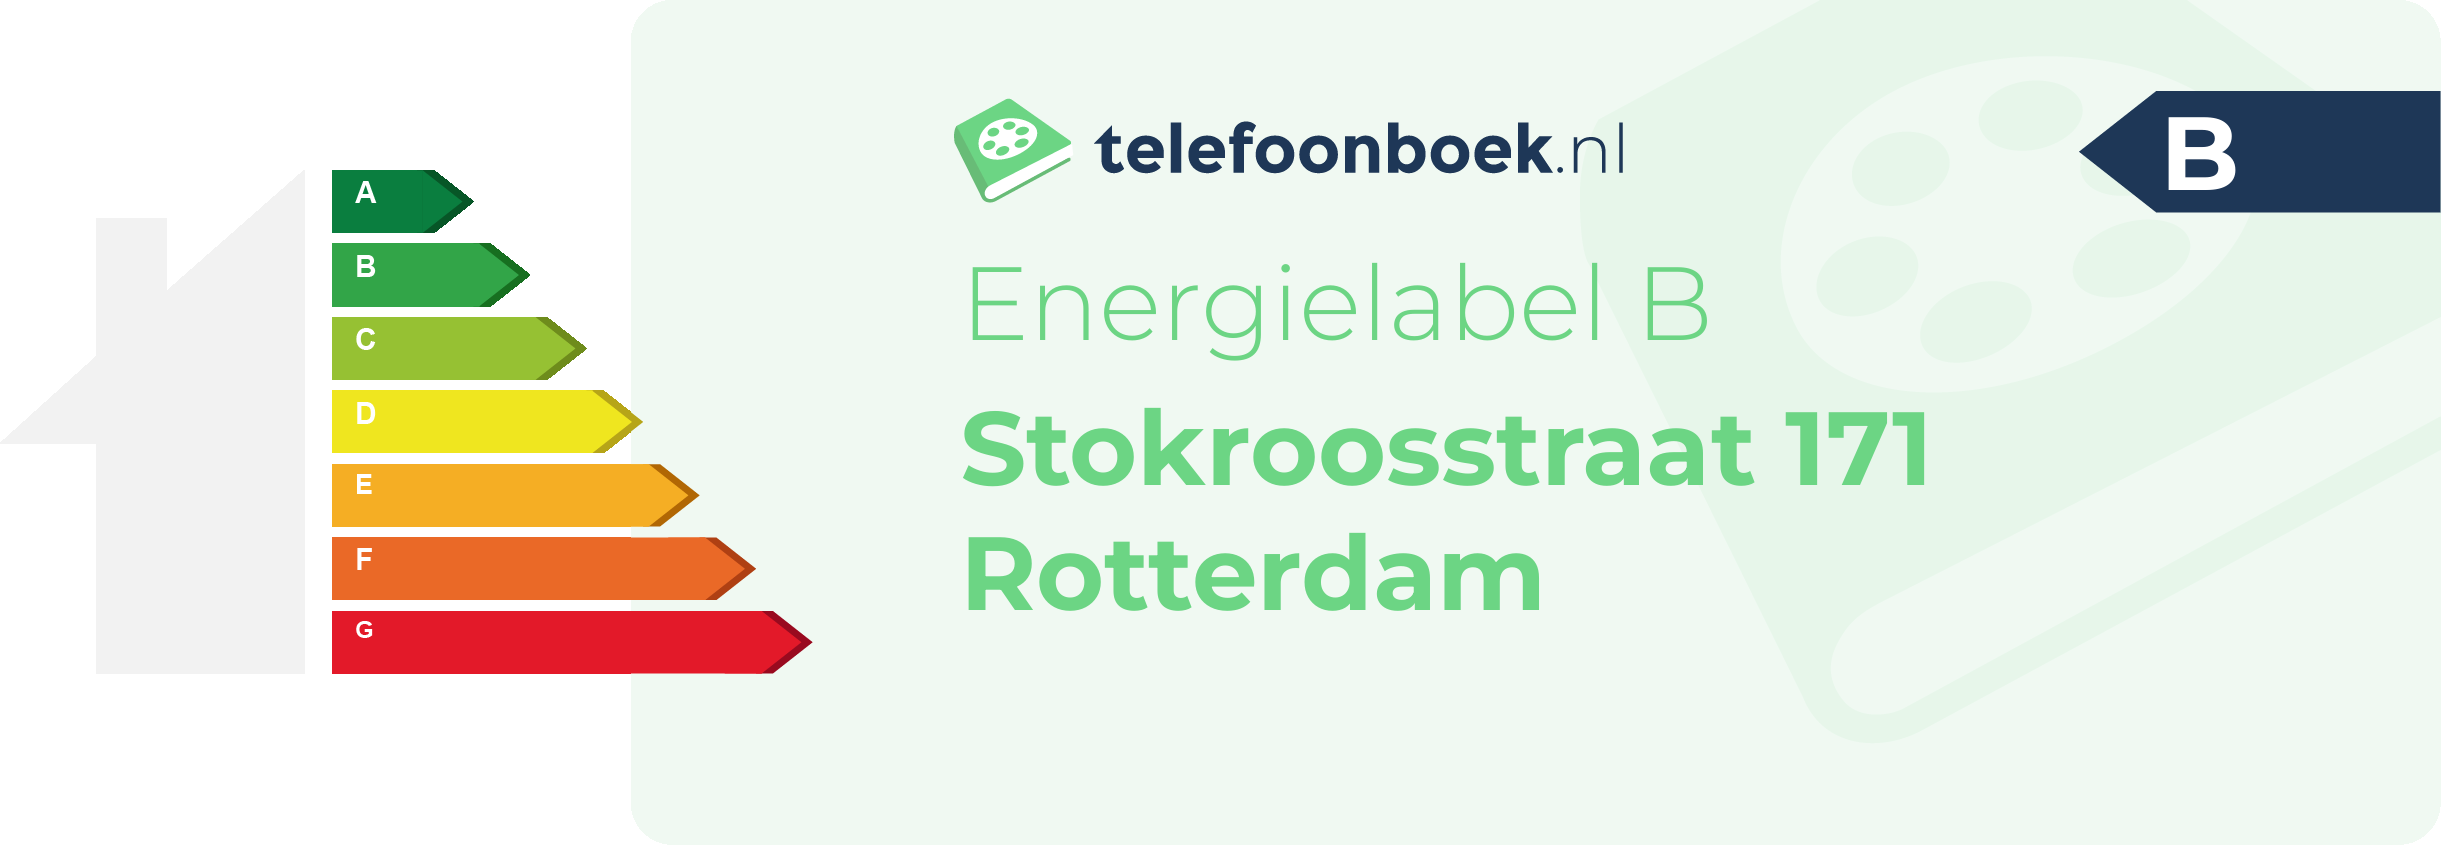 Energielabel Stokroosstraat 171 Rotterdam